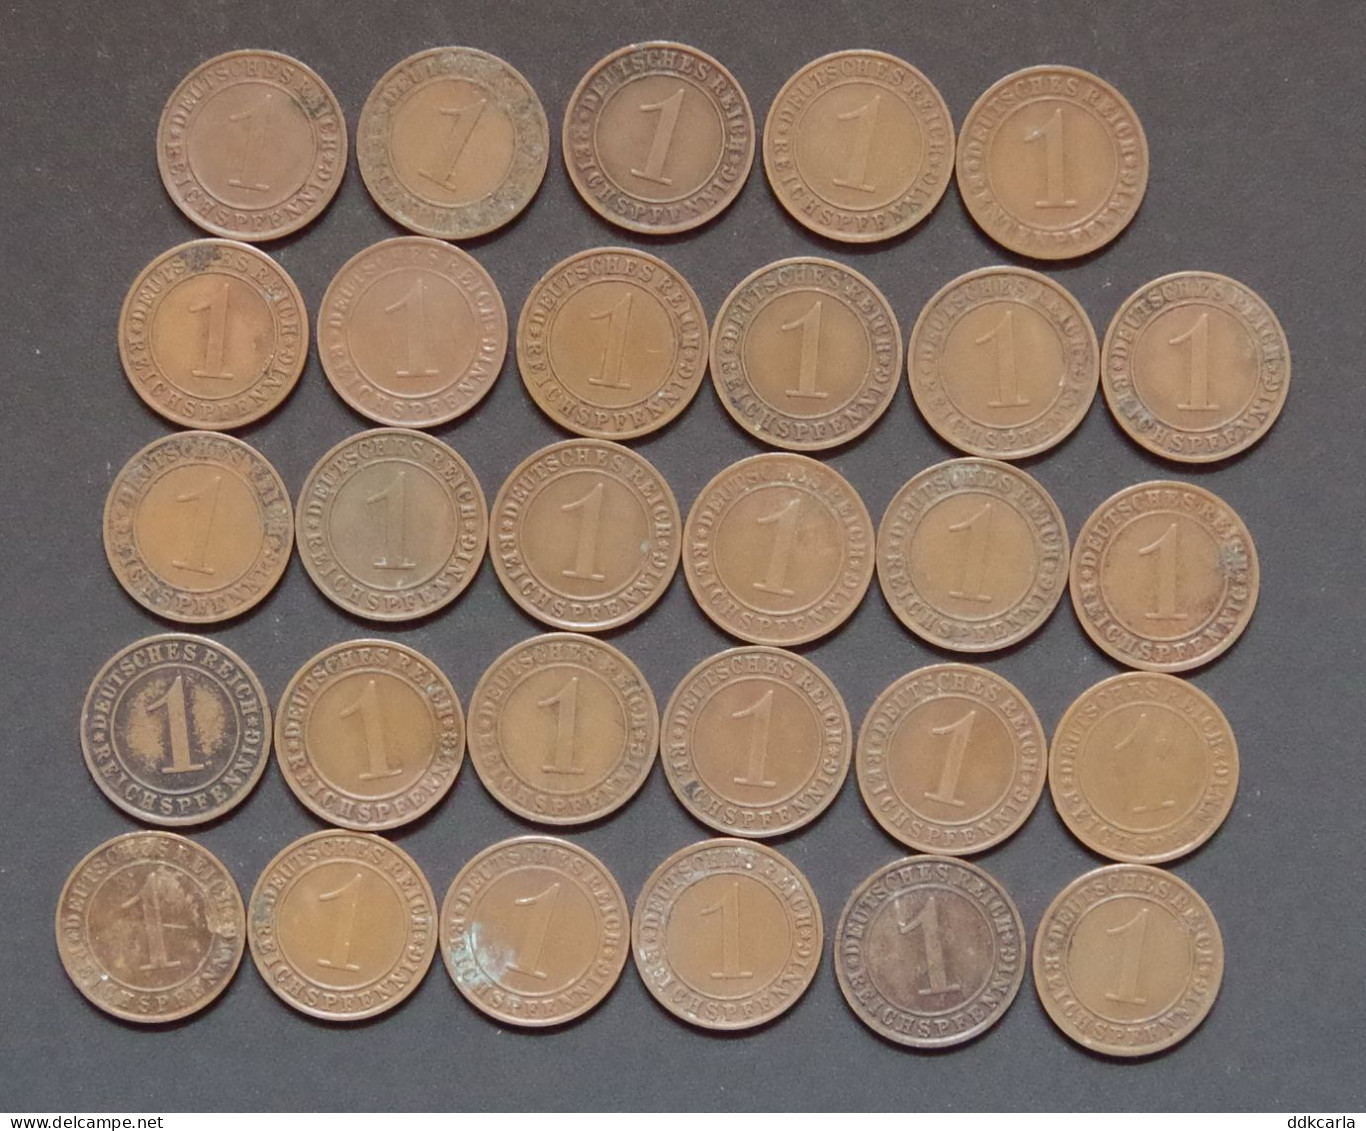 Konvolut Weimar Rep 1 RentePfennig1924 A,D ReichsPf 1924 G,J 25 E,G,J 28 F,D 29 A,D,E 30 A 31 A,D,E,F 32 A 33 A,F (29st) - 1 Renten- & 1 Reichspfennig